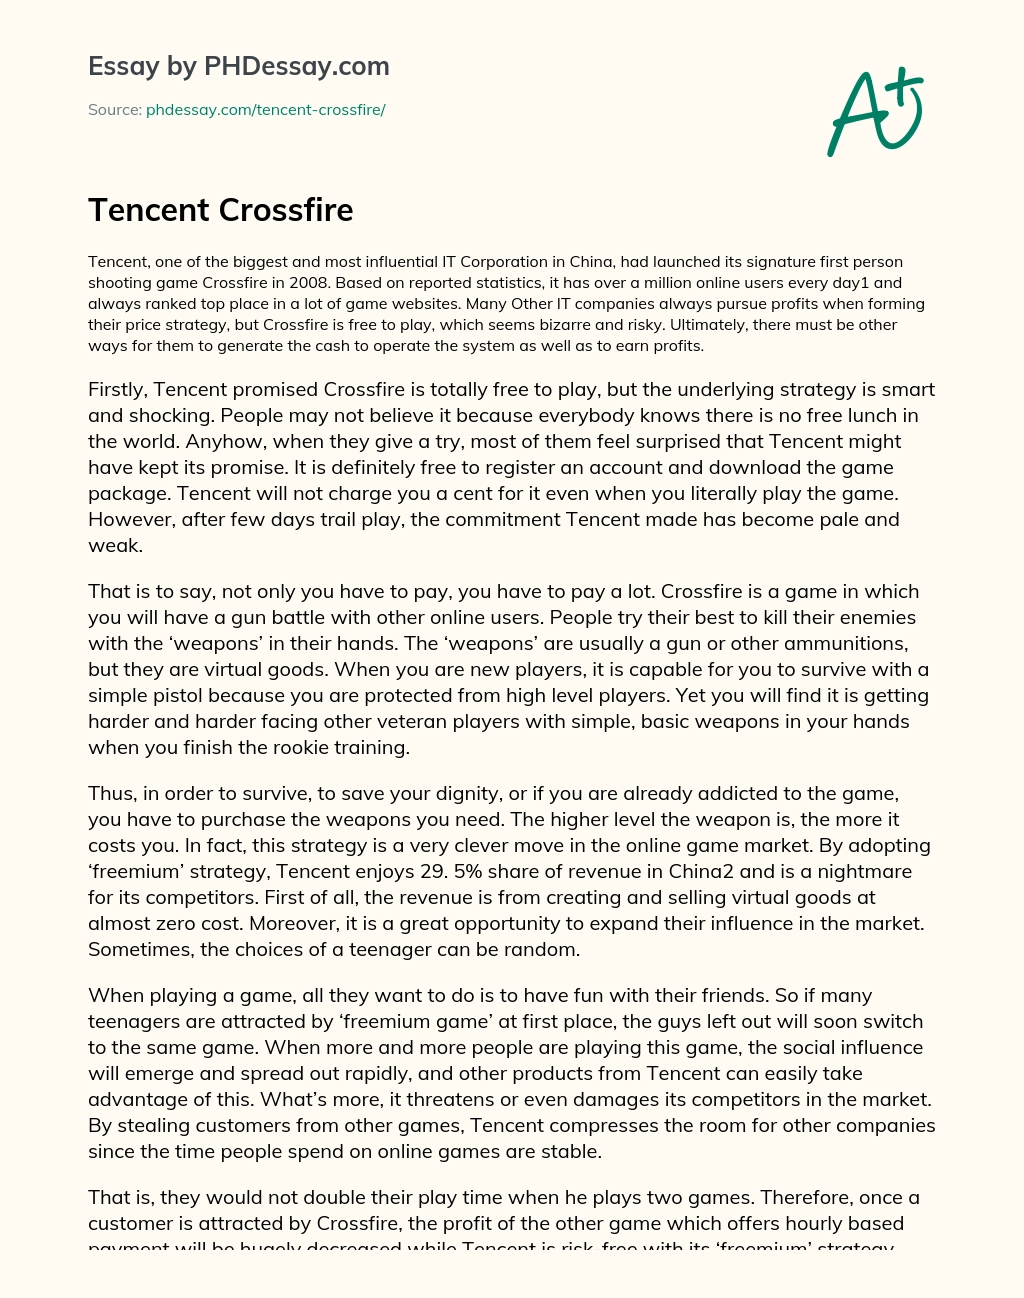 Tencent Crossfire essay